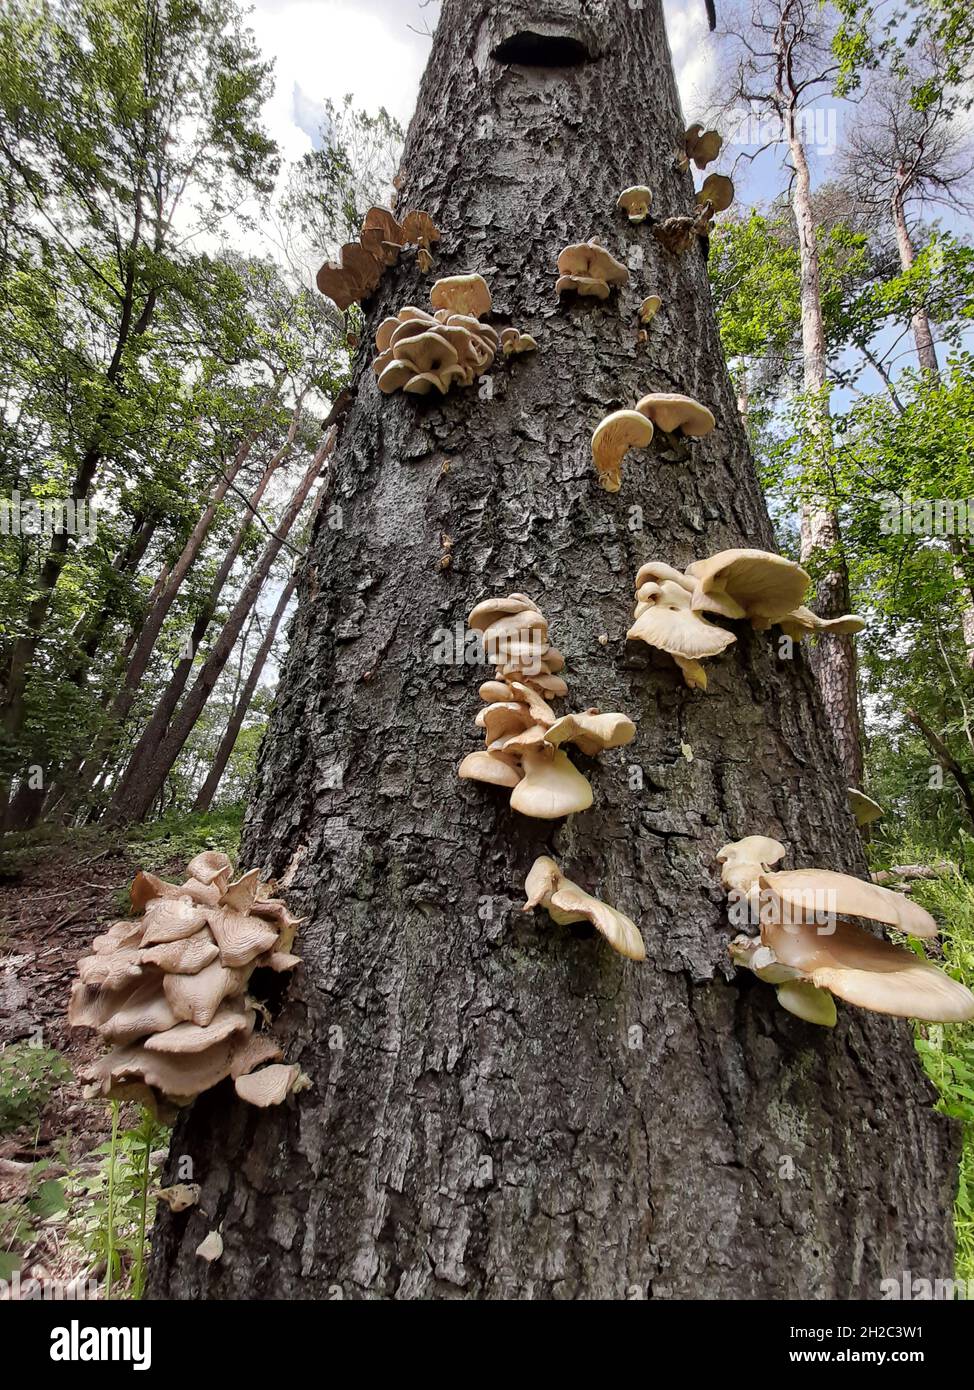 bracket fungi on a dead trunk, Germany Stock Photo